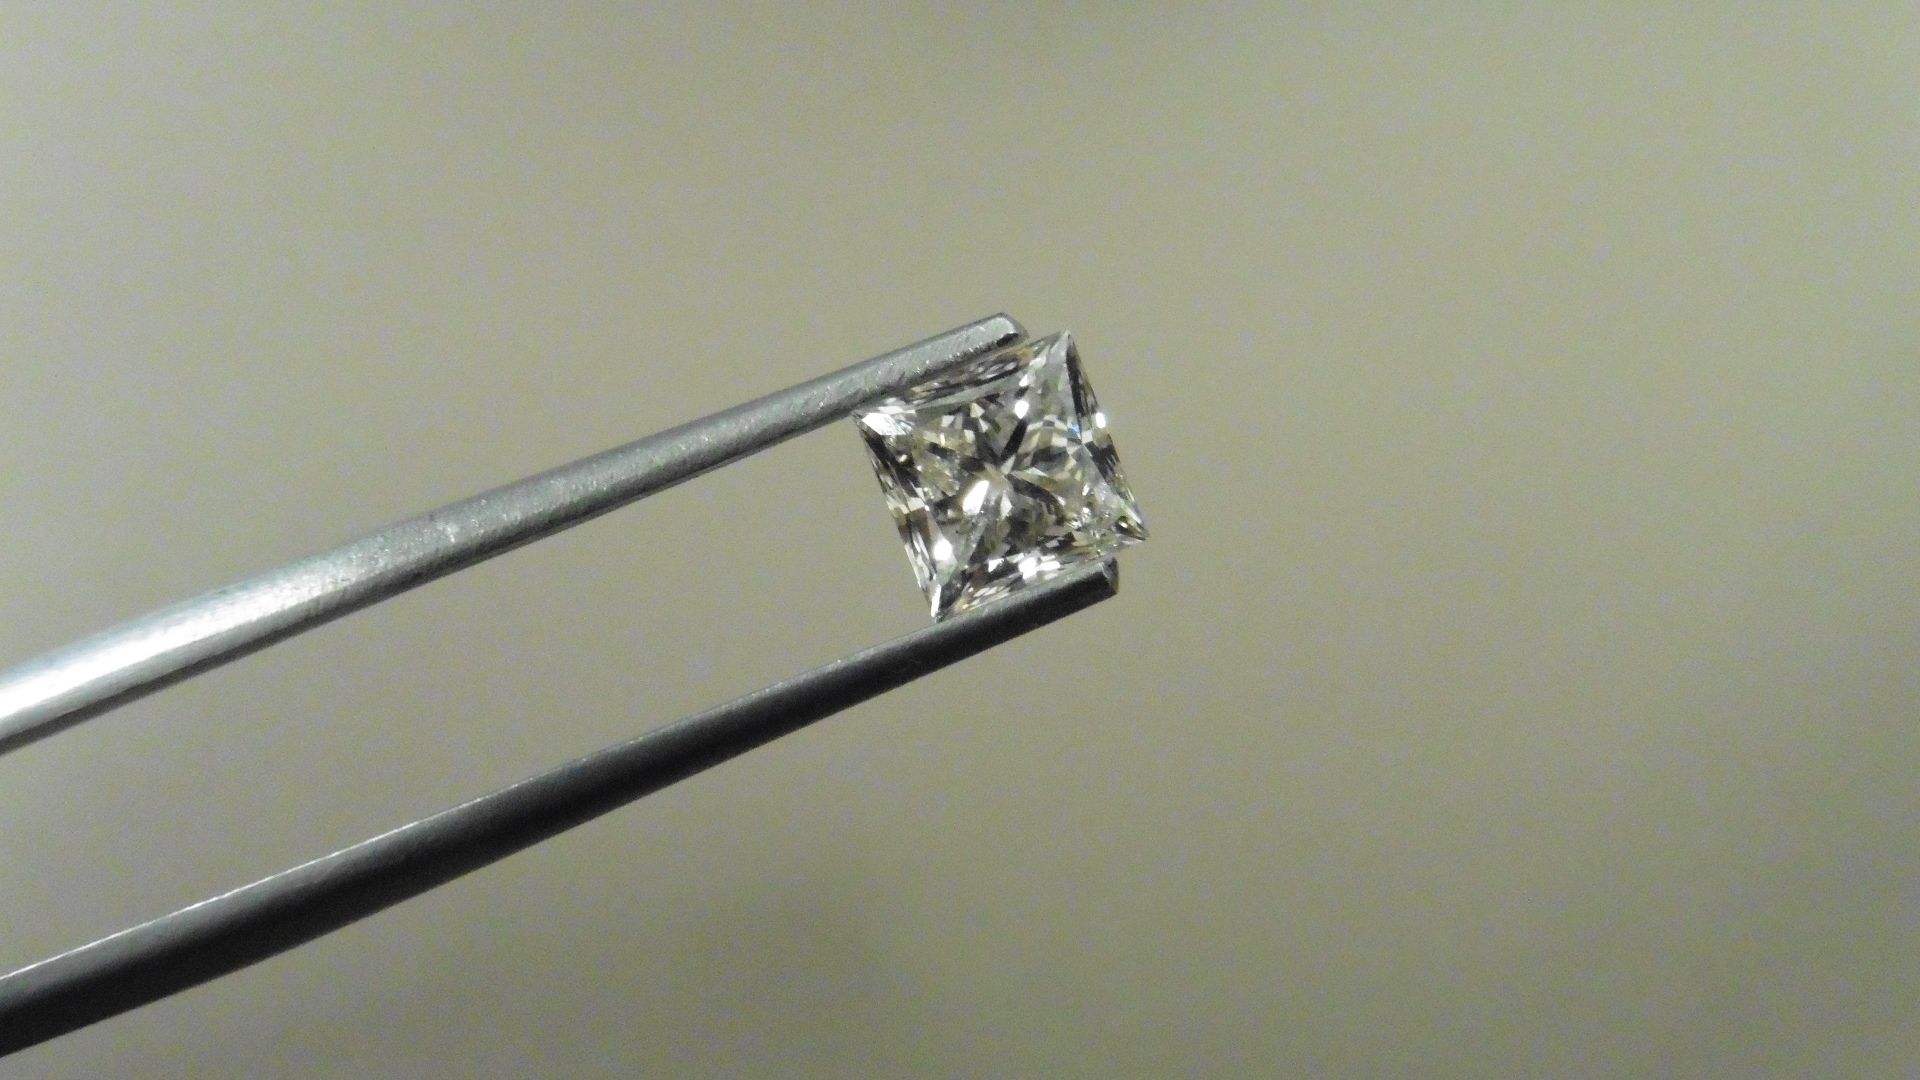 1.00ct natural loose princess cut diamond.iJ colour and I1 clarity. 5.56 x 5.37 x 3.78mm. No